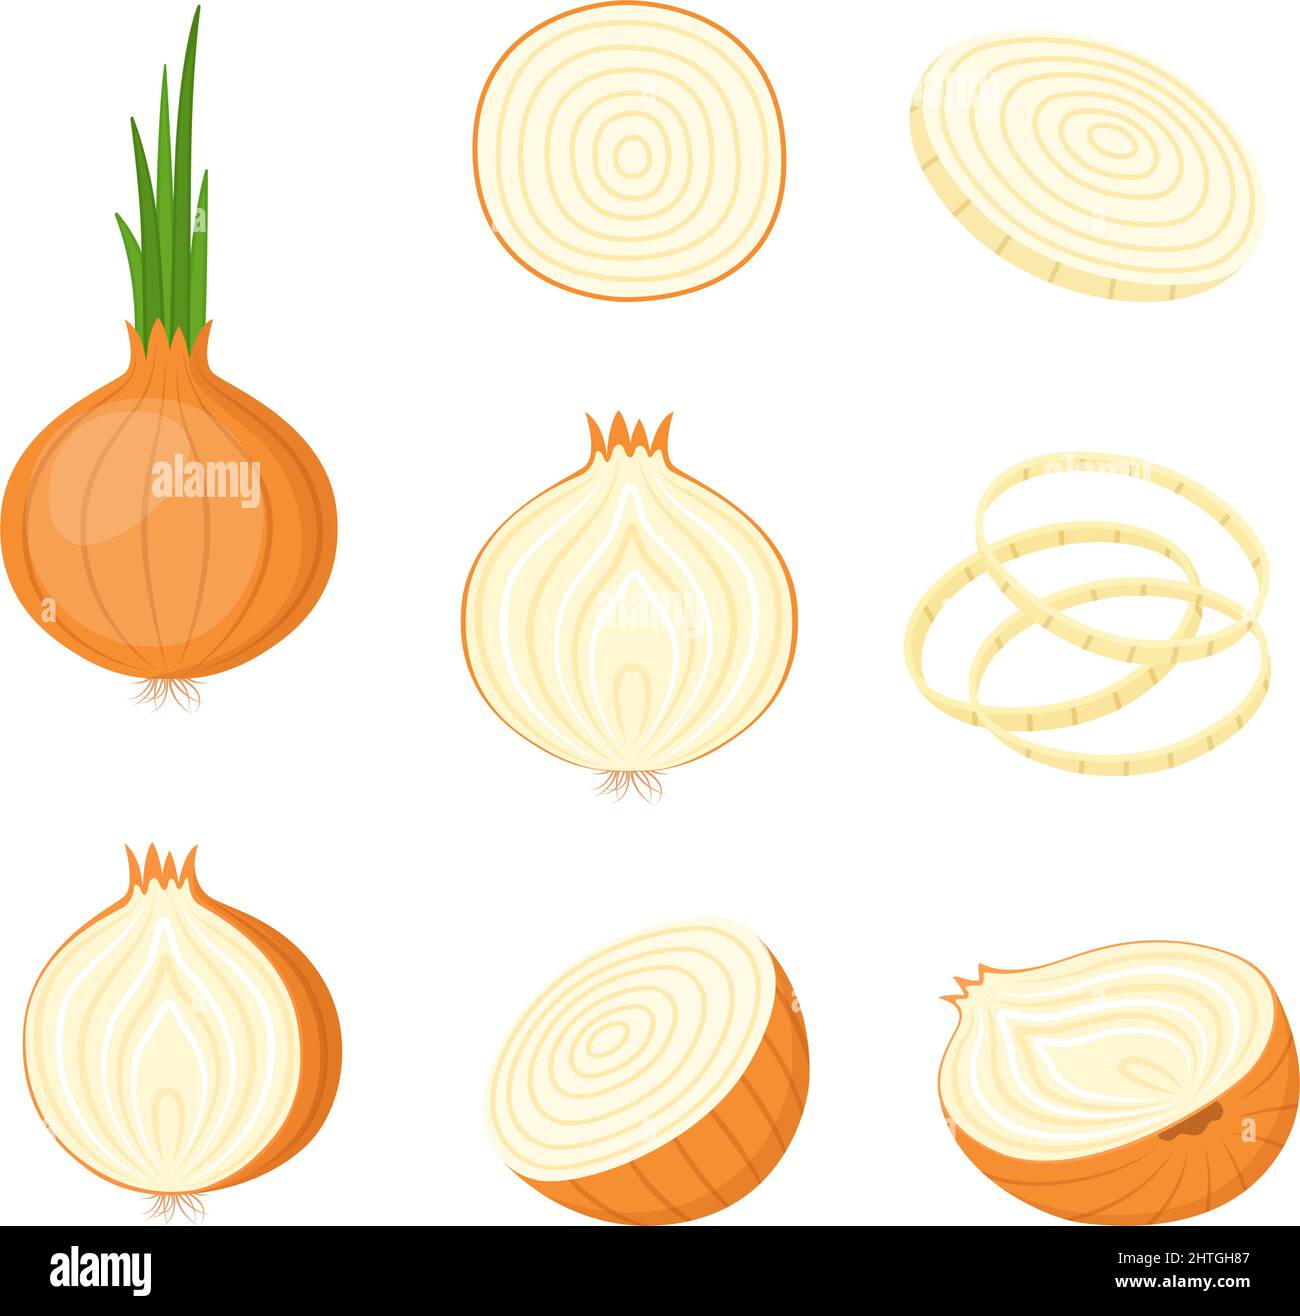 Onion, whole and cut. Farm vegetables, vector illustration Stock Vector